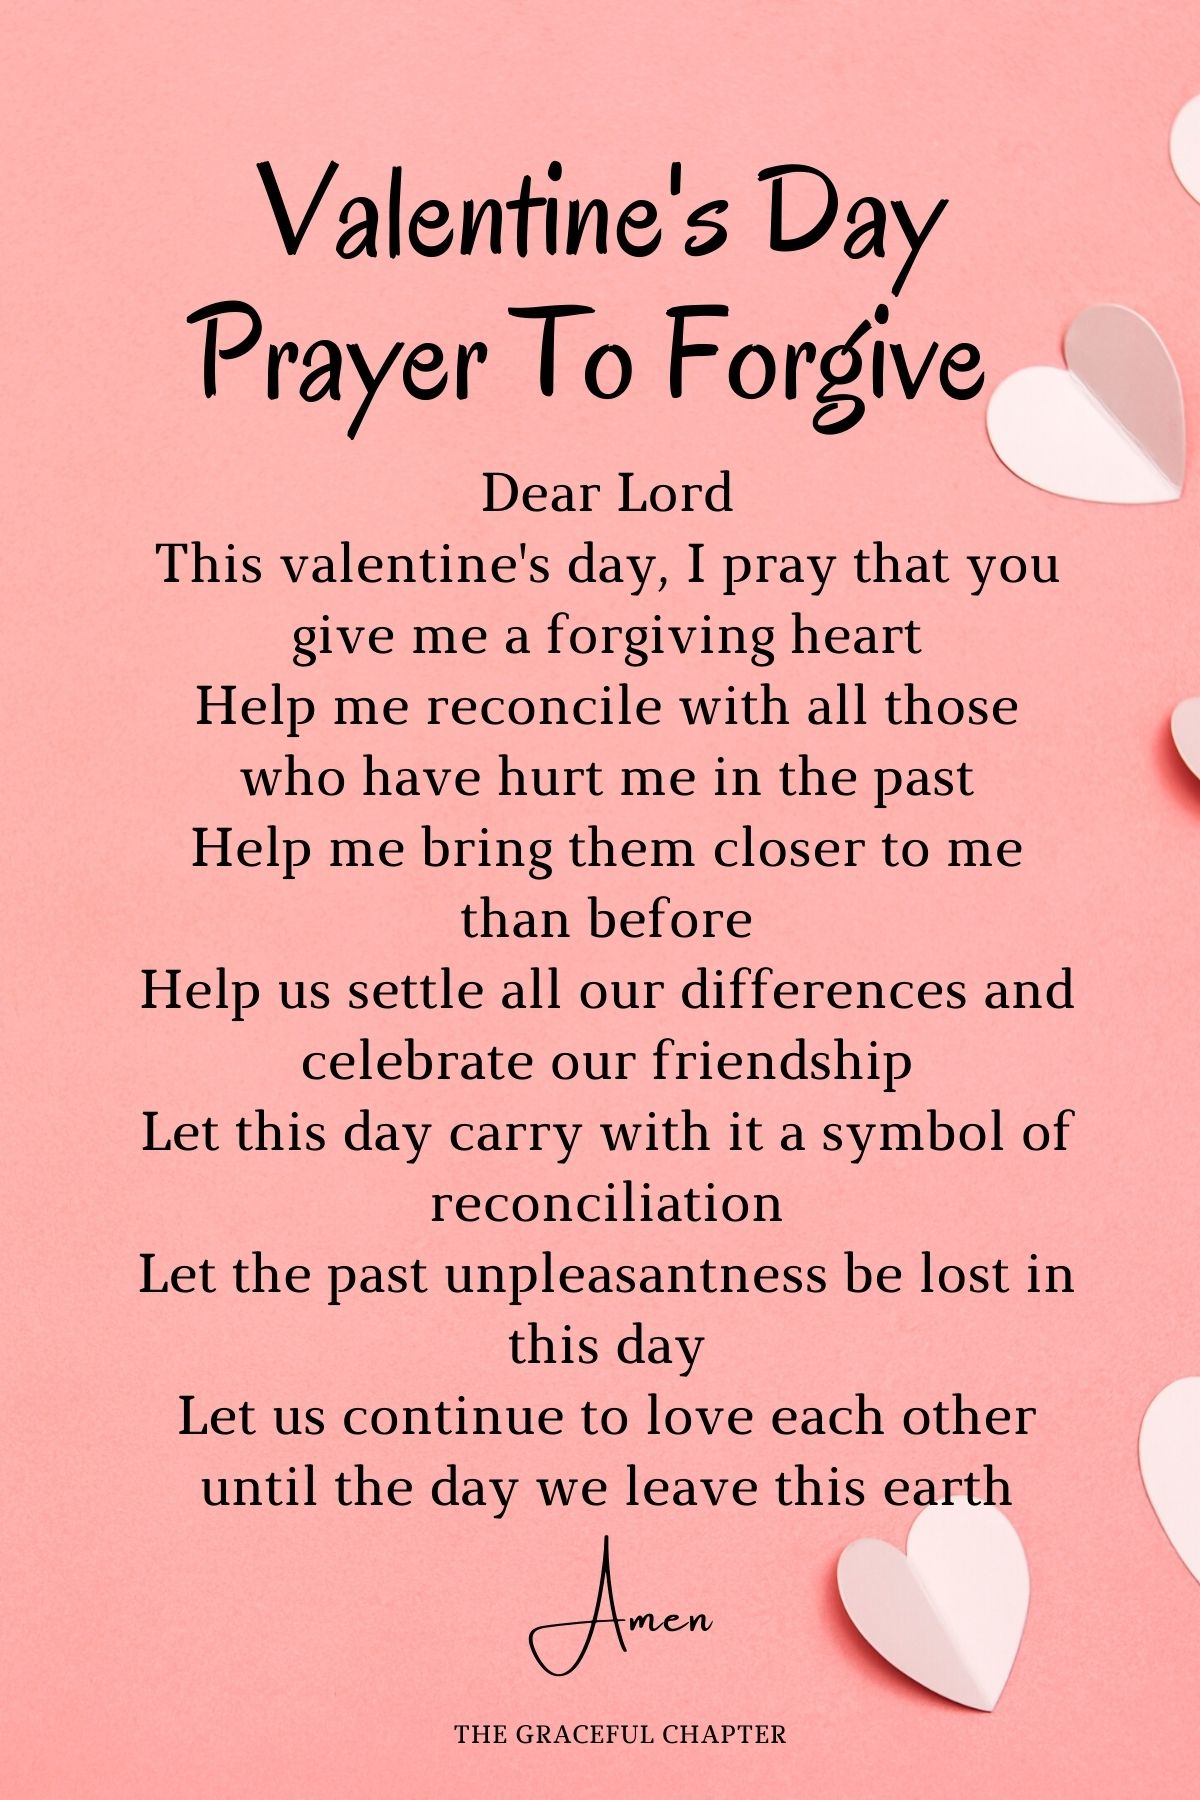 Valentine's day prayer to forgive 